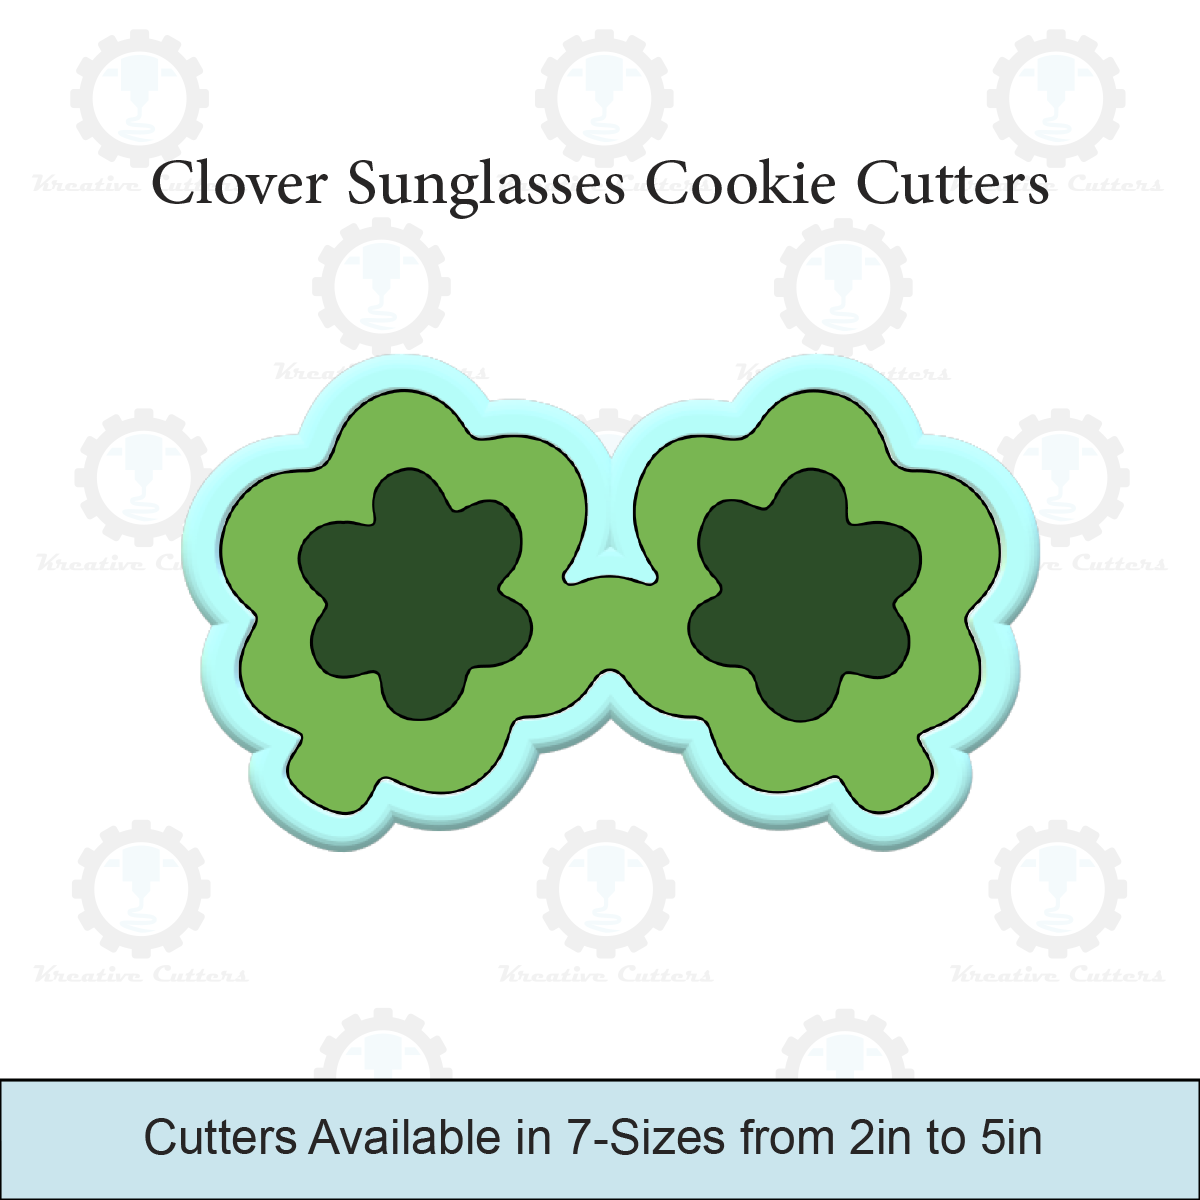 Clover Sunglasses Cookie Cutters